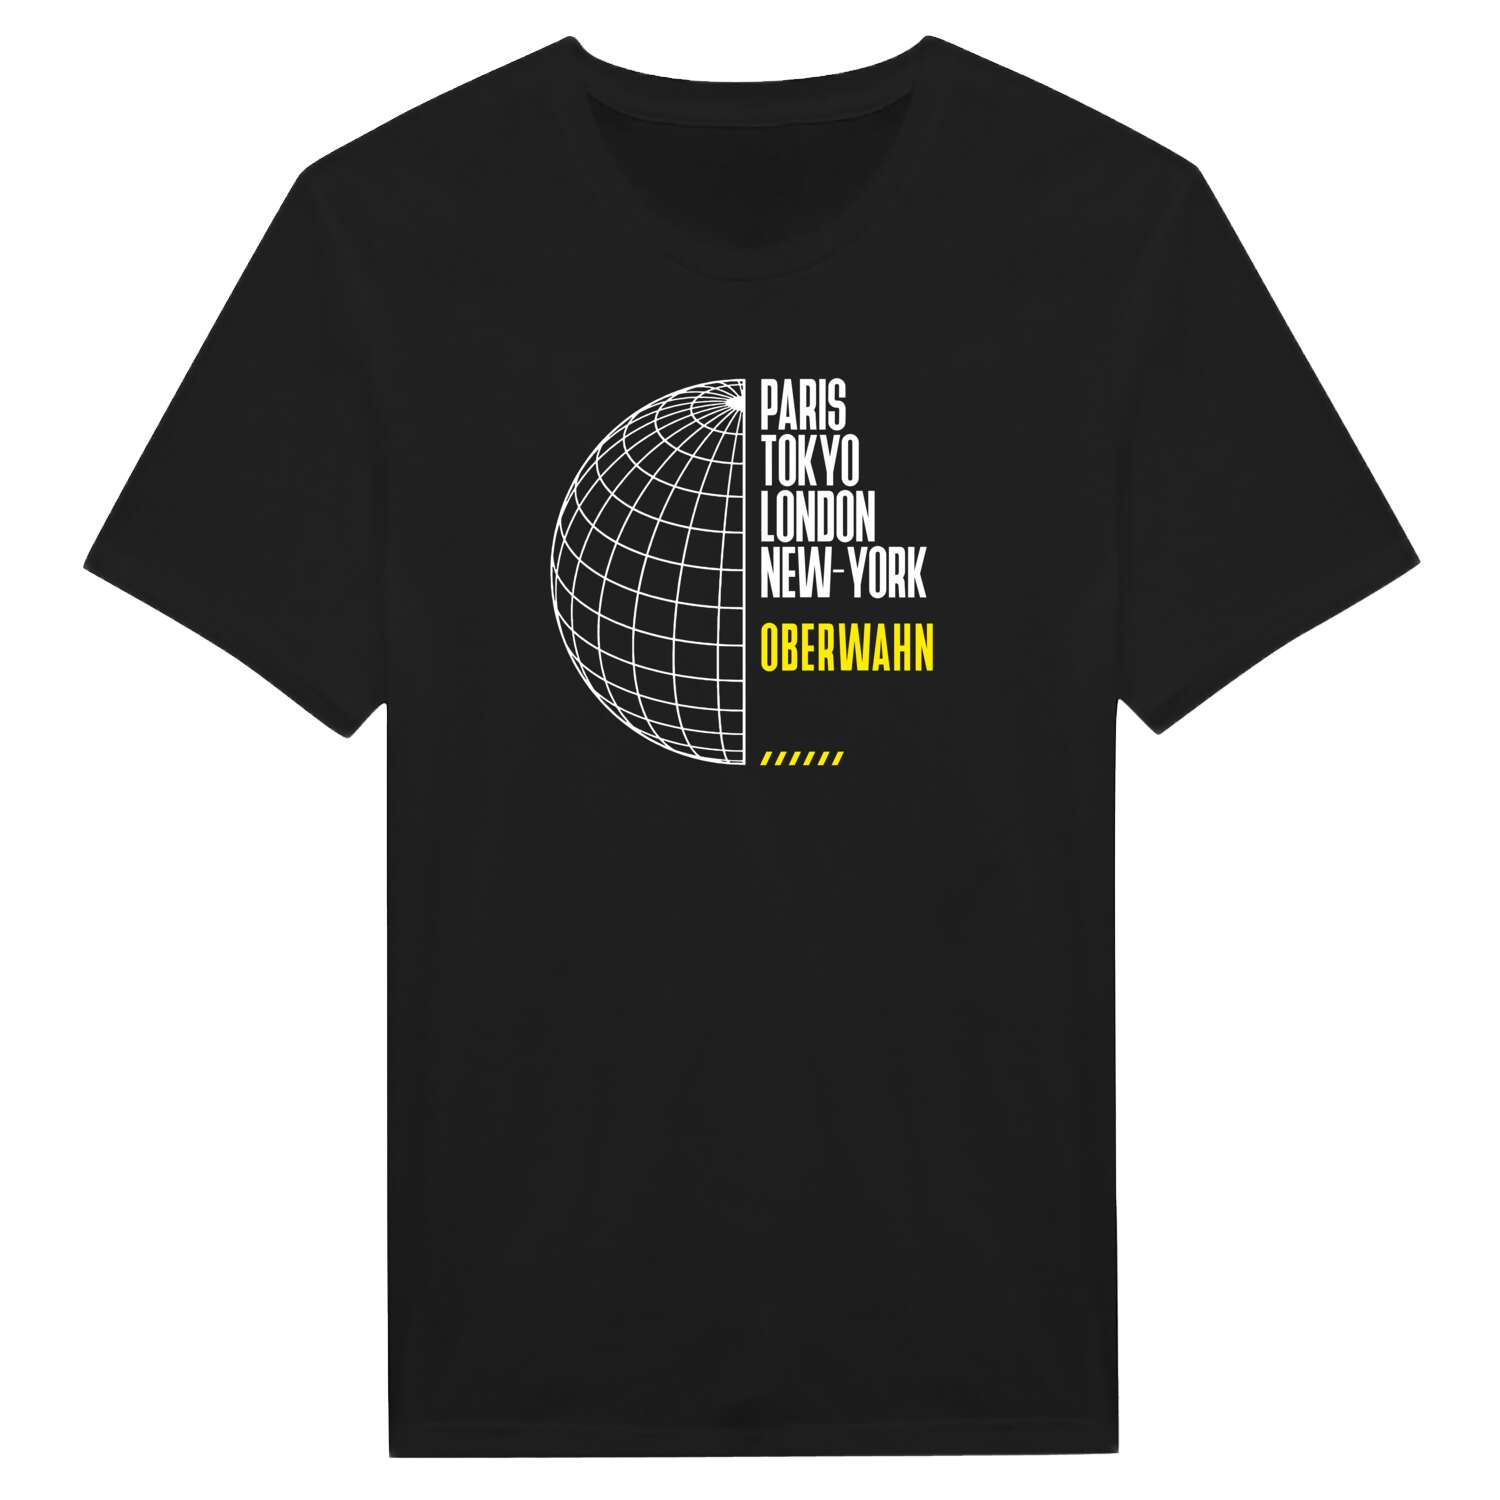 Oberwahn T-Shirt »Paris Tokyo London«